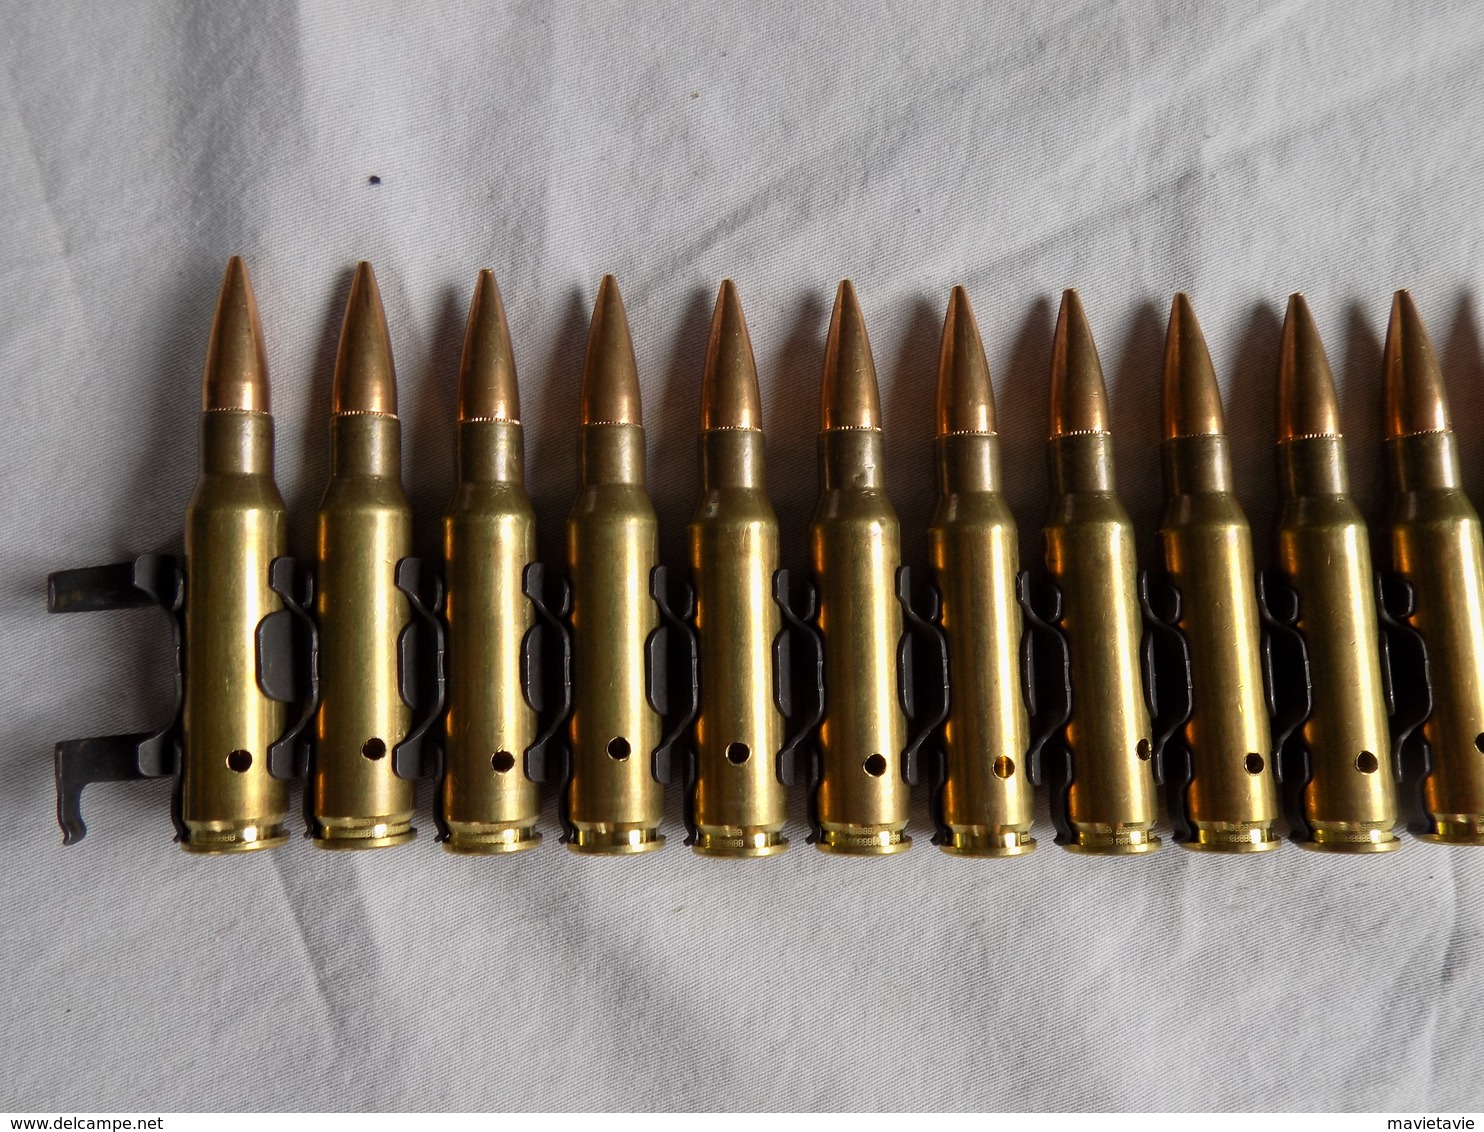 Bande de 23 cartouches calibre 7.62x51 neutralisees par perçage